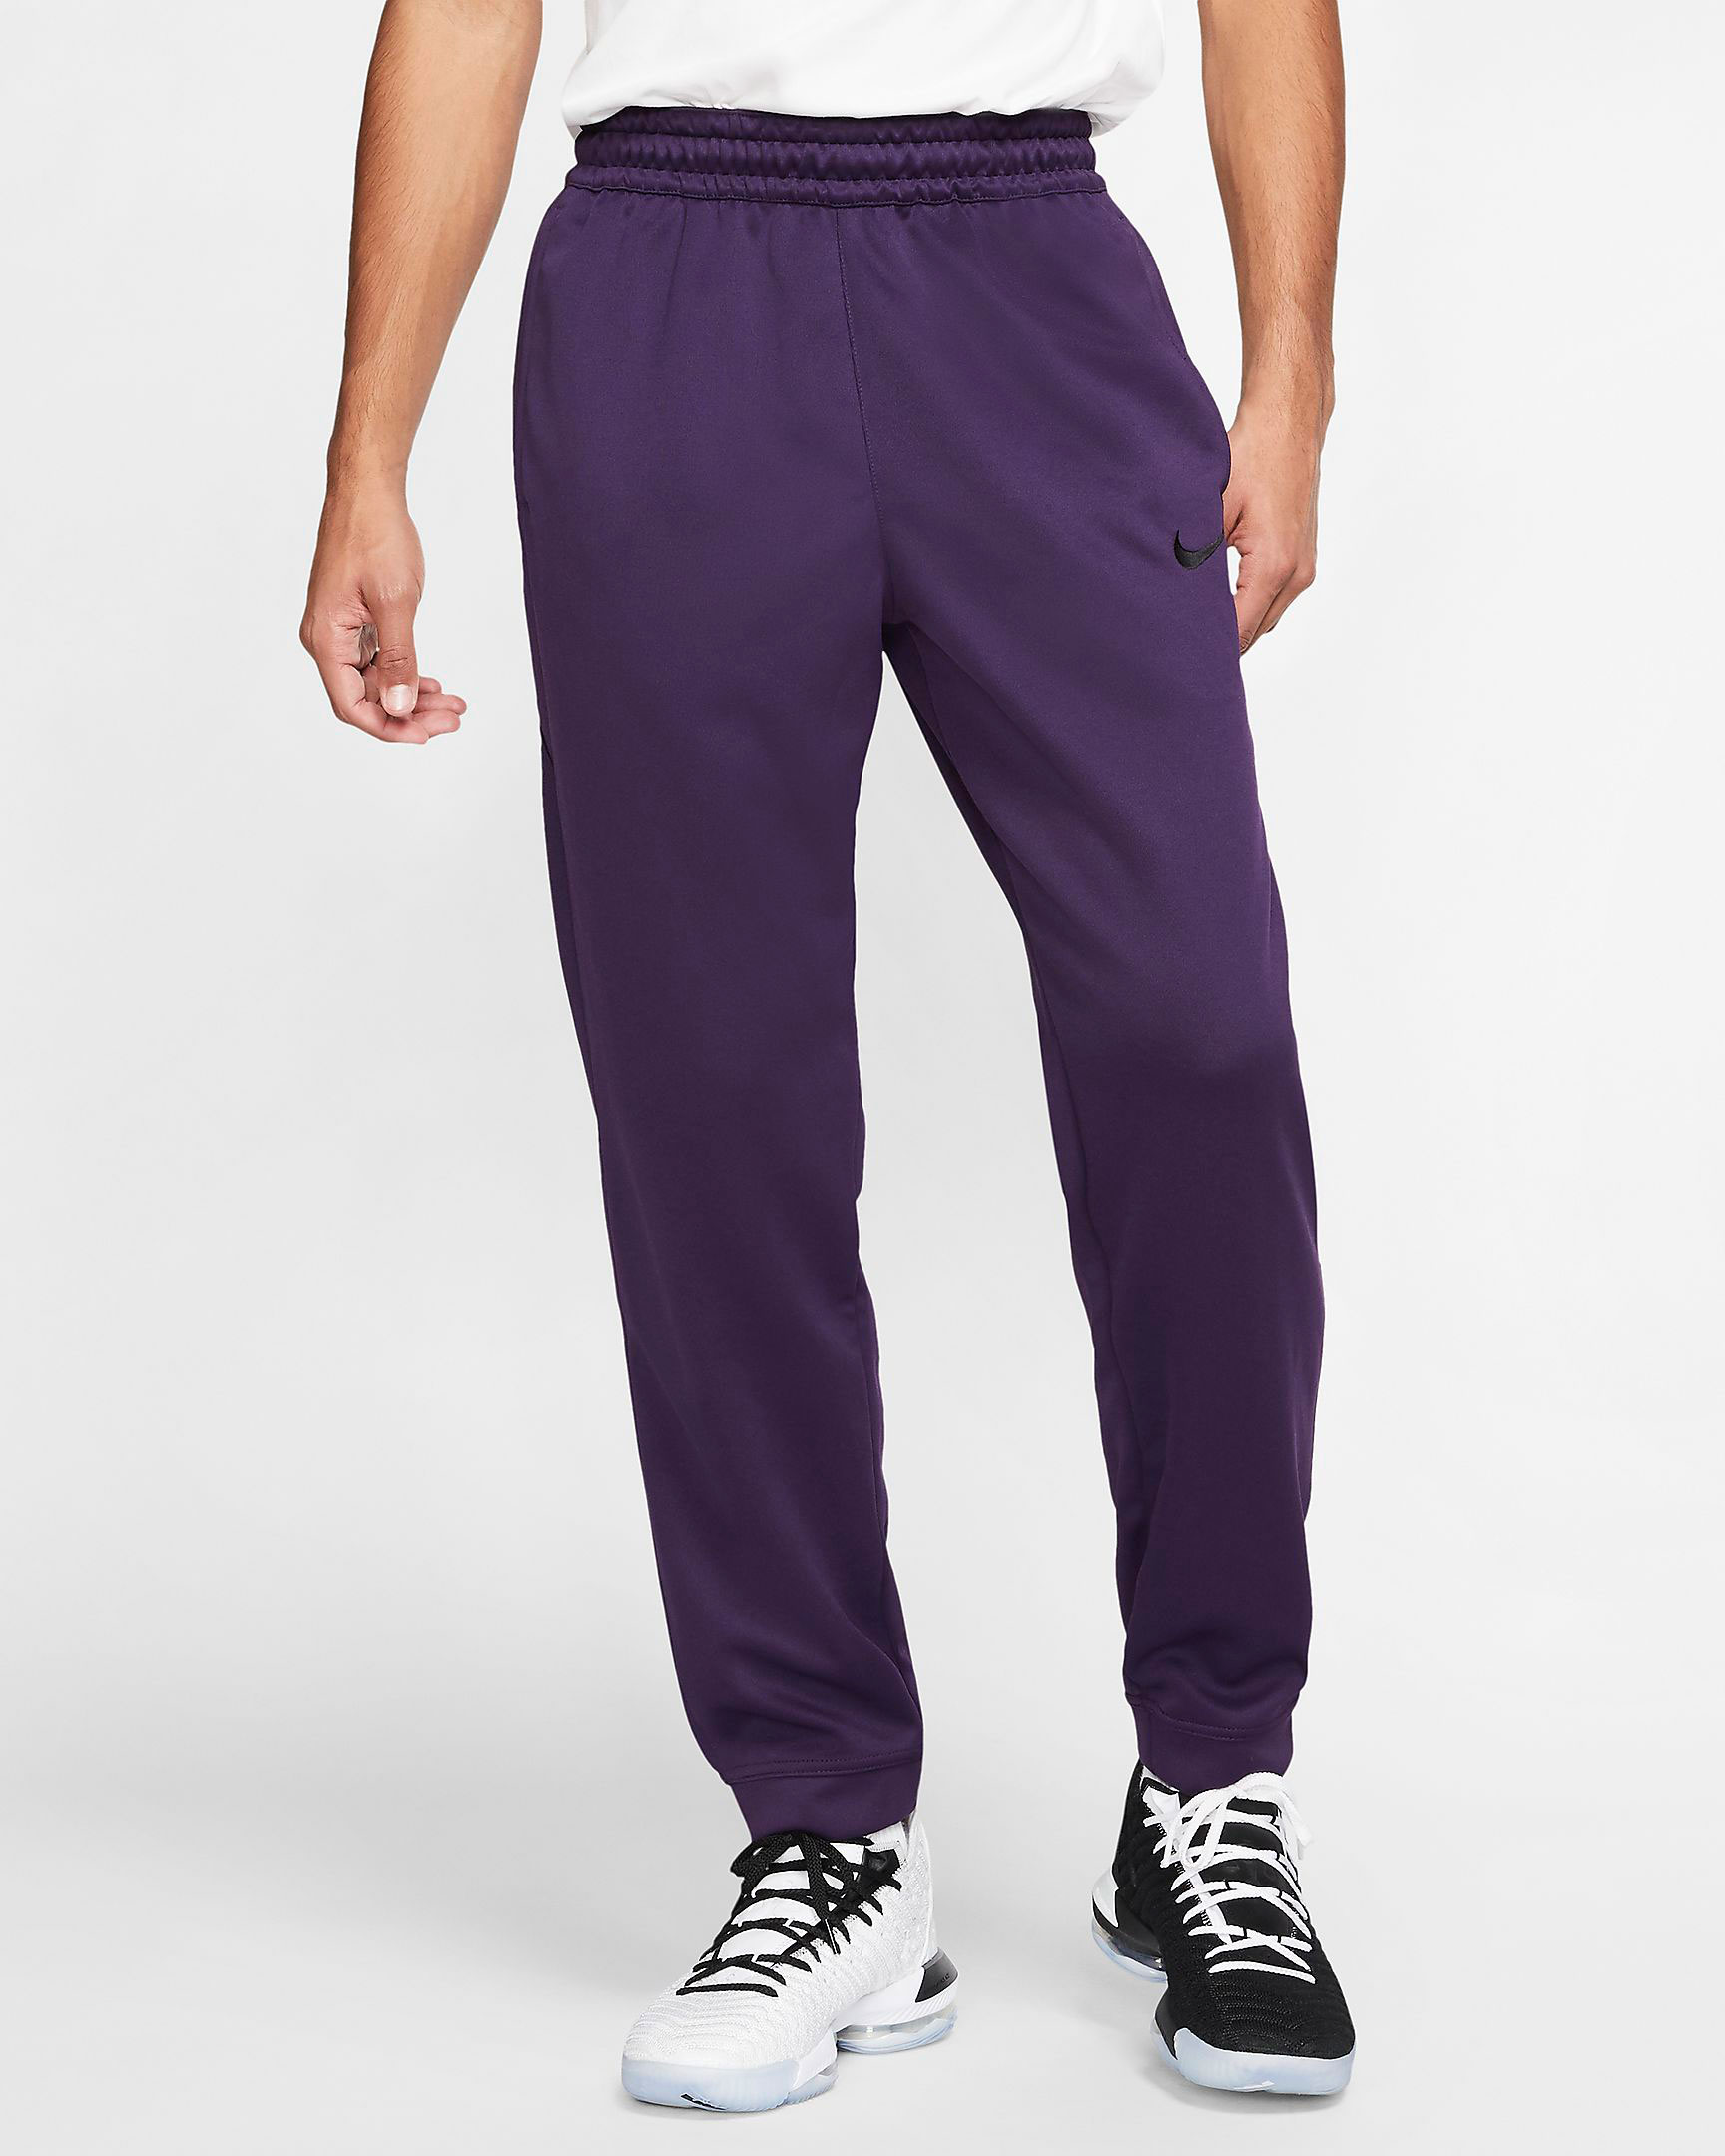 nike-basketball-grand-purple-pants